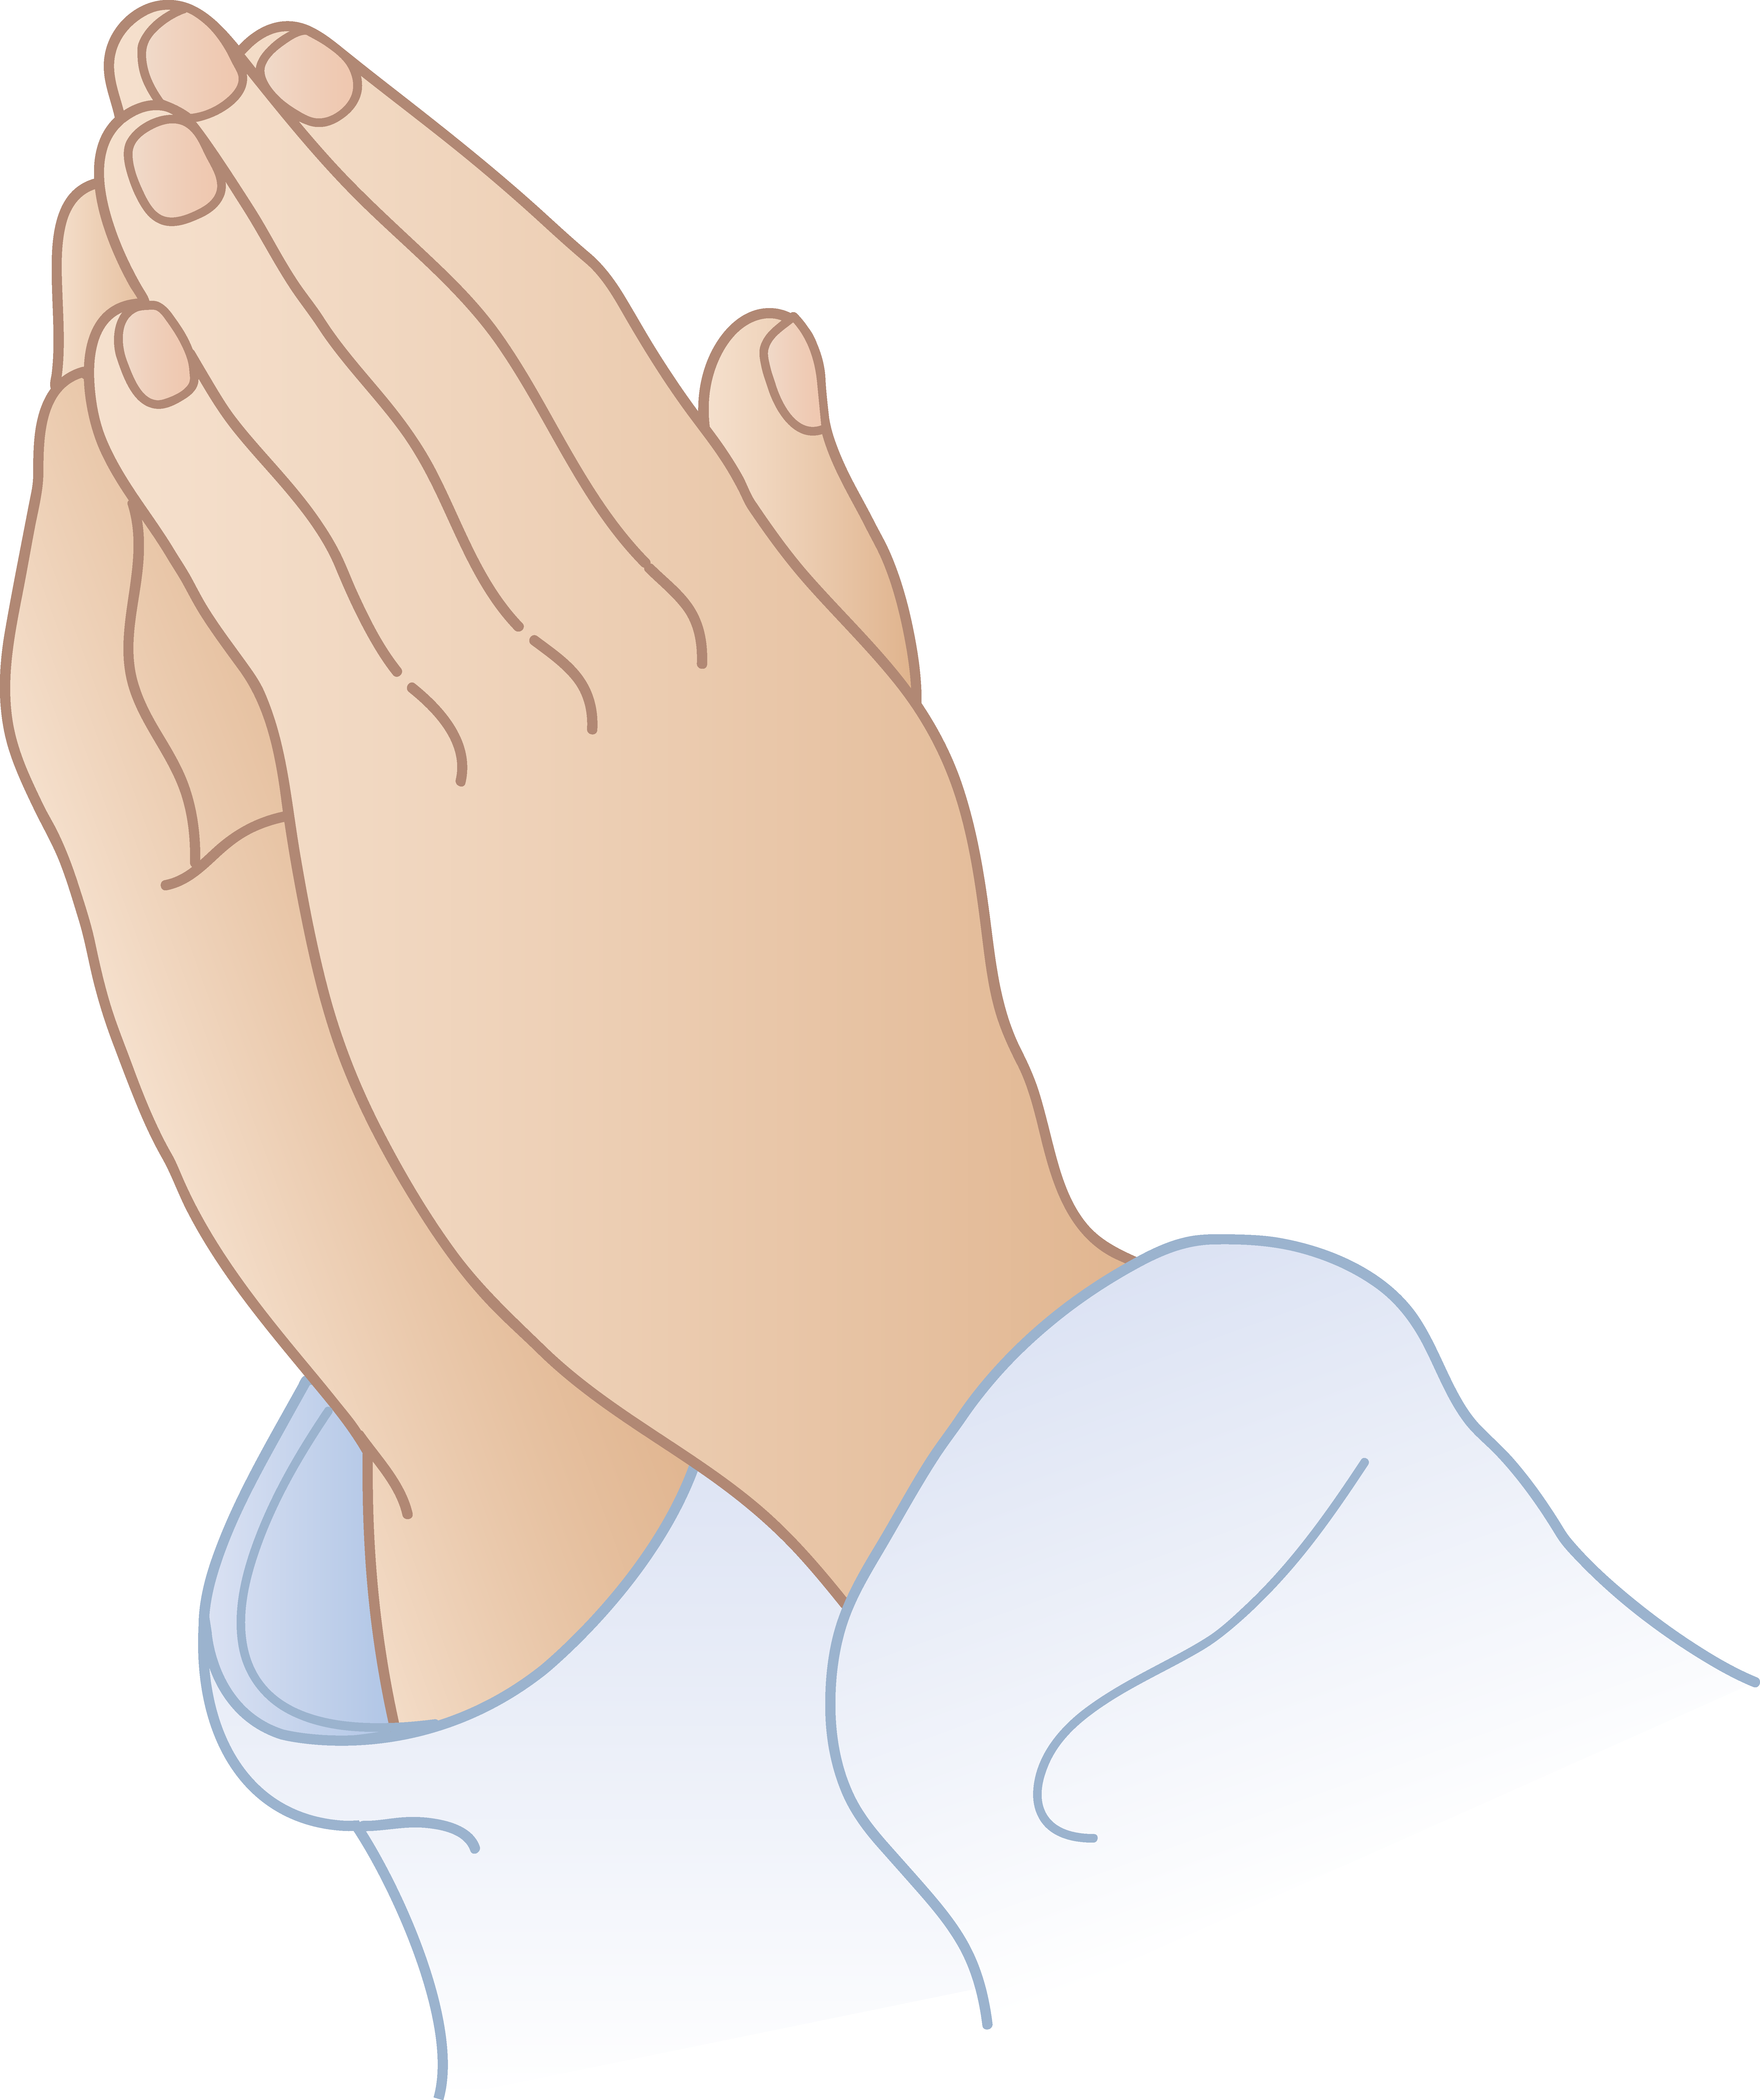 Hand clipart prayer. Praying hands free clip